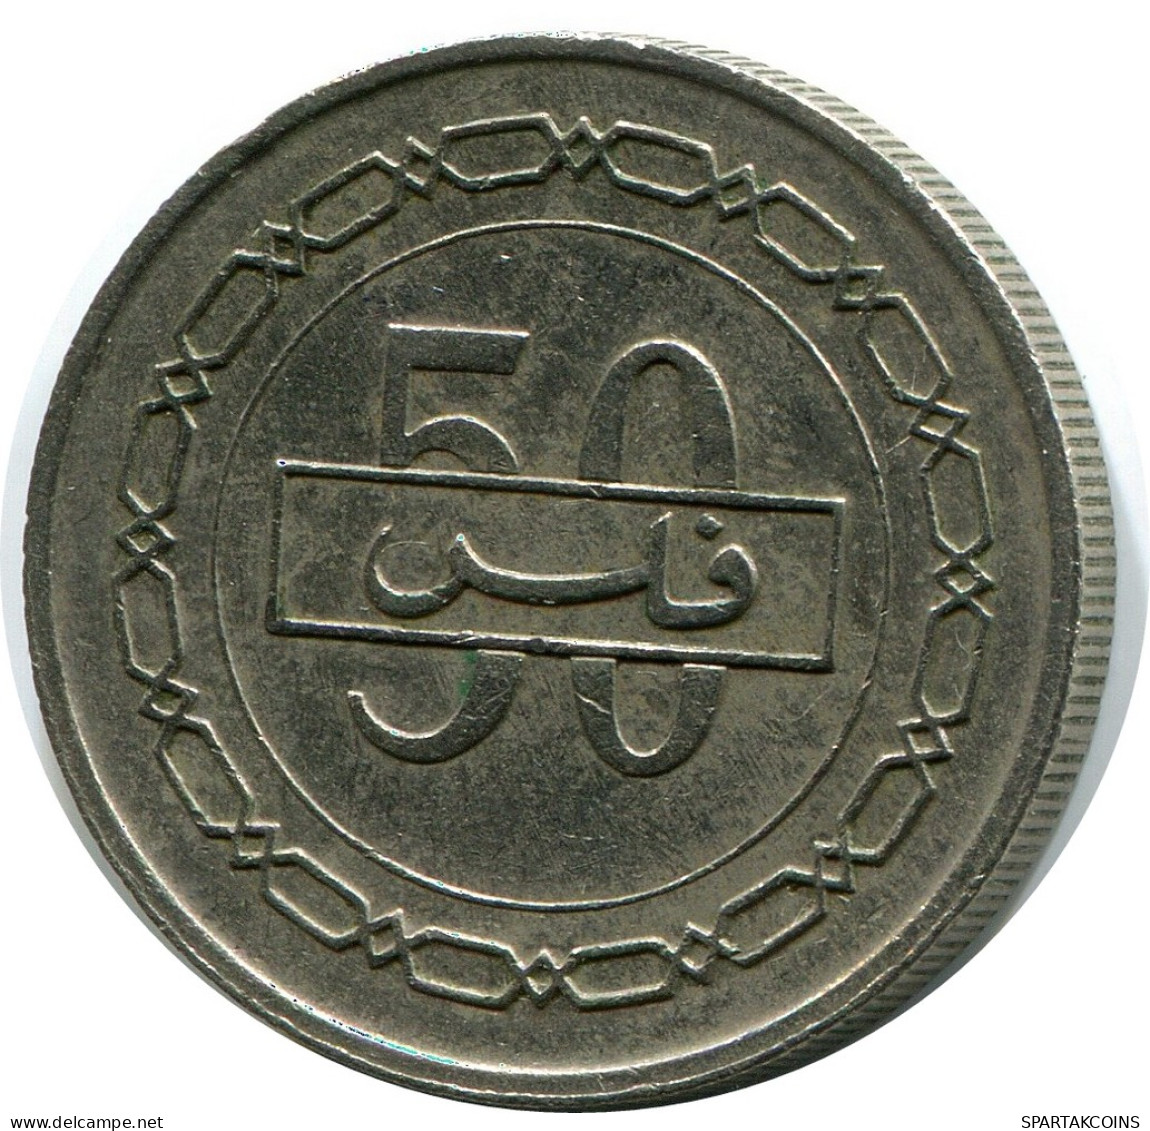 50 FILS 1992 BAHRAIN Coin #AP980.U - Bahrain